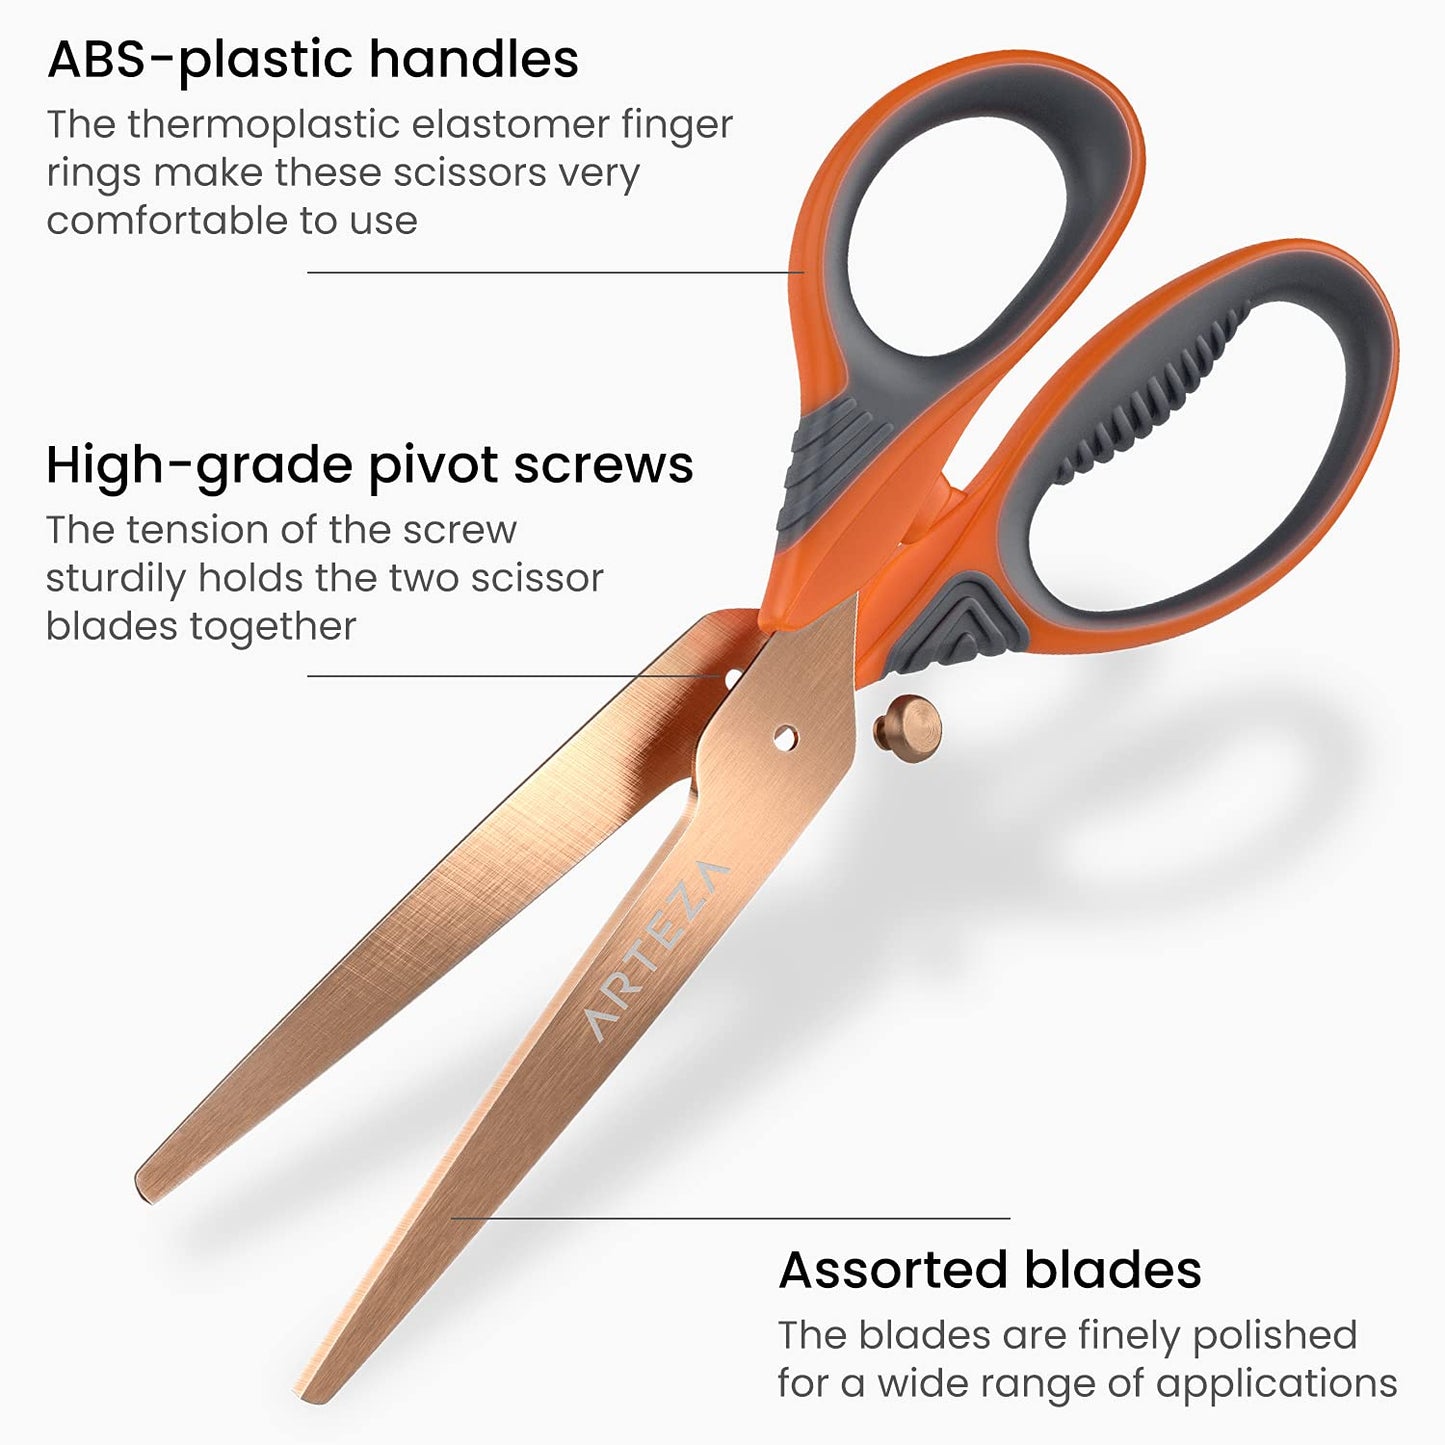 Arteza Crafting Scissors, Assorted Blades & Sizes- Set of 3